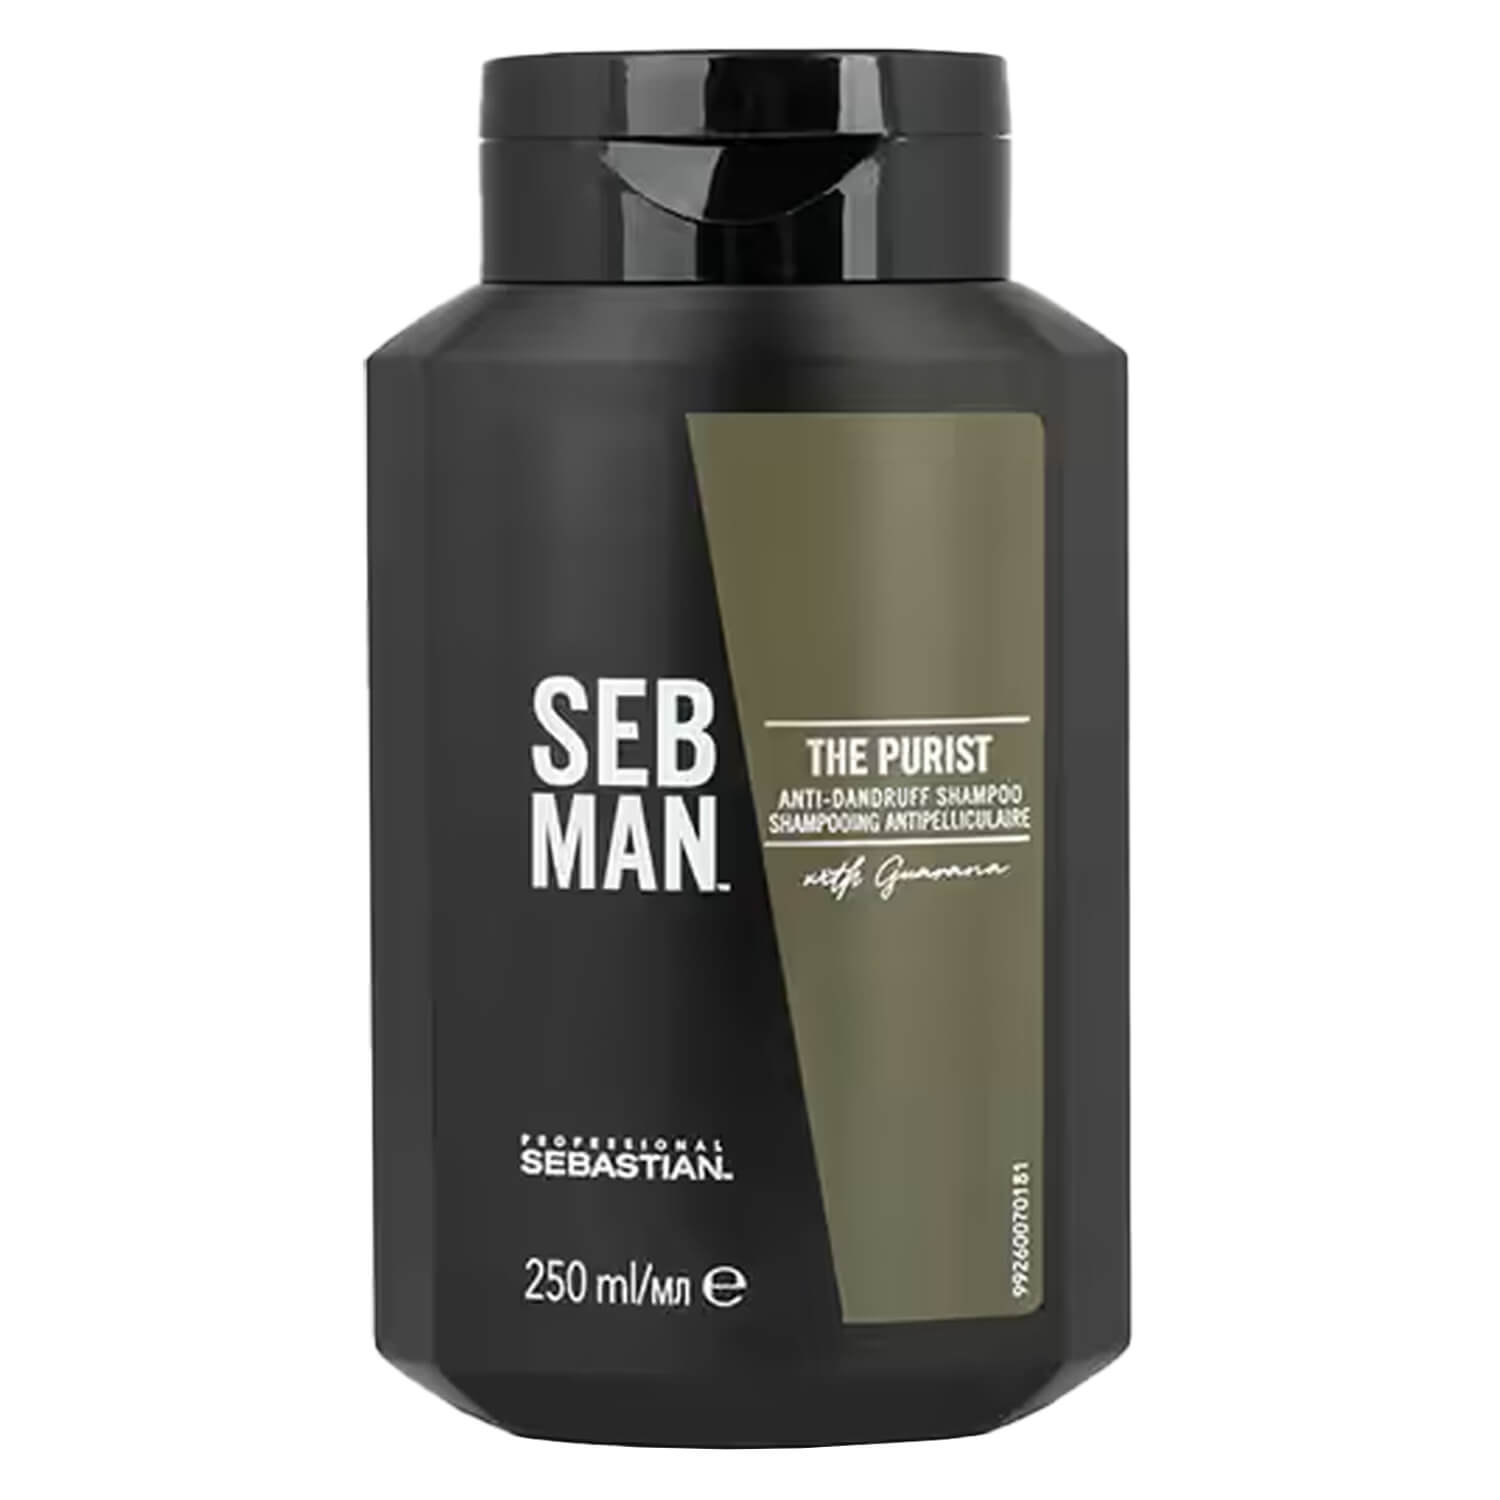 Produktbild von SEB MAN - The Purist Anti-Dandruff Shampoo